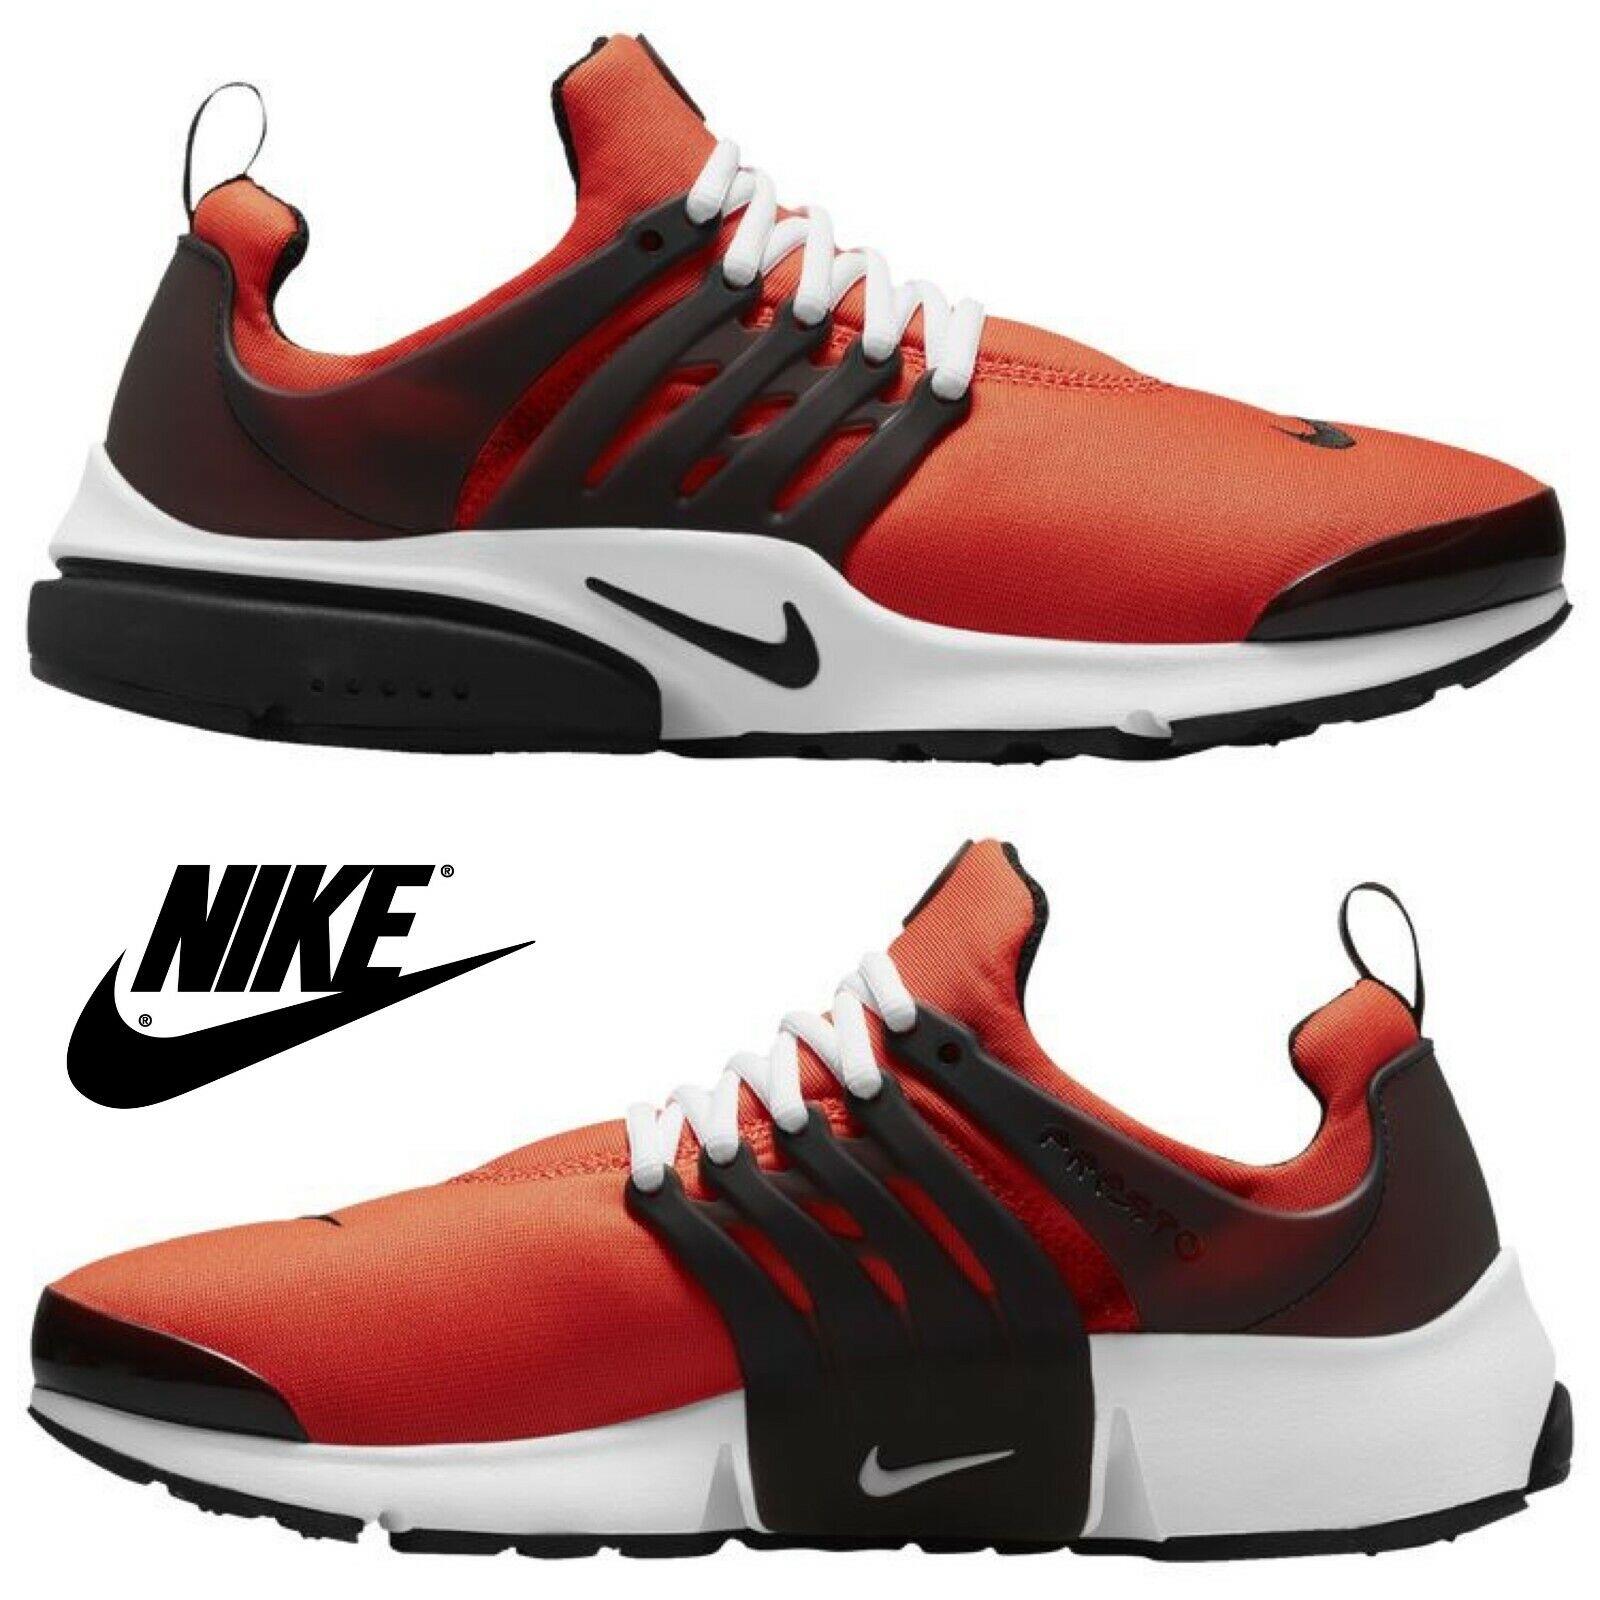 Nike Air Presto Running Sneakers Mens Athletic Comfort Casual Shoes Black Orange